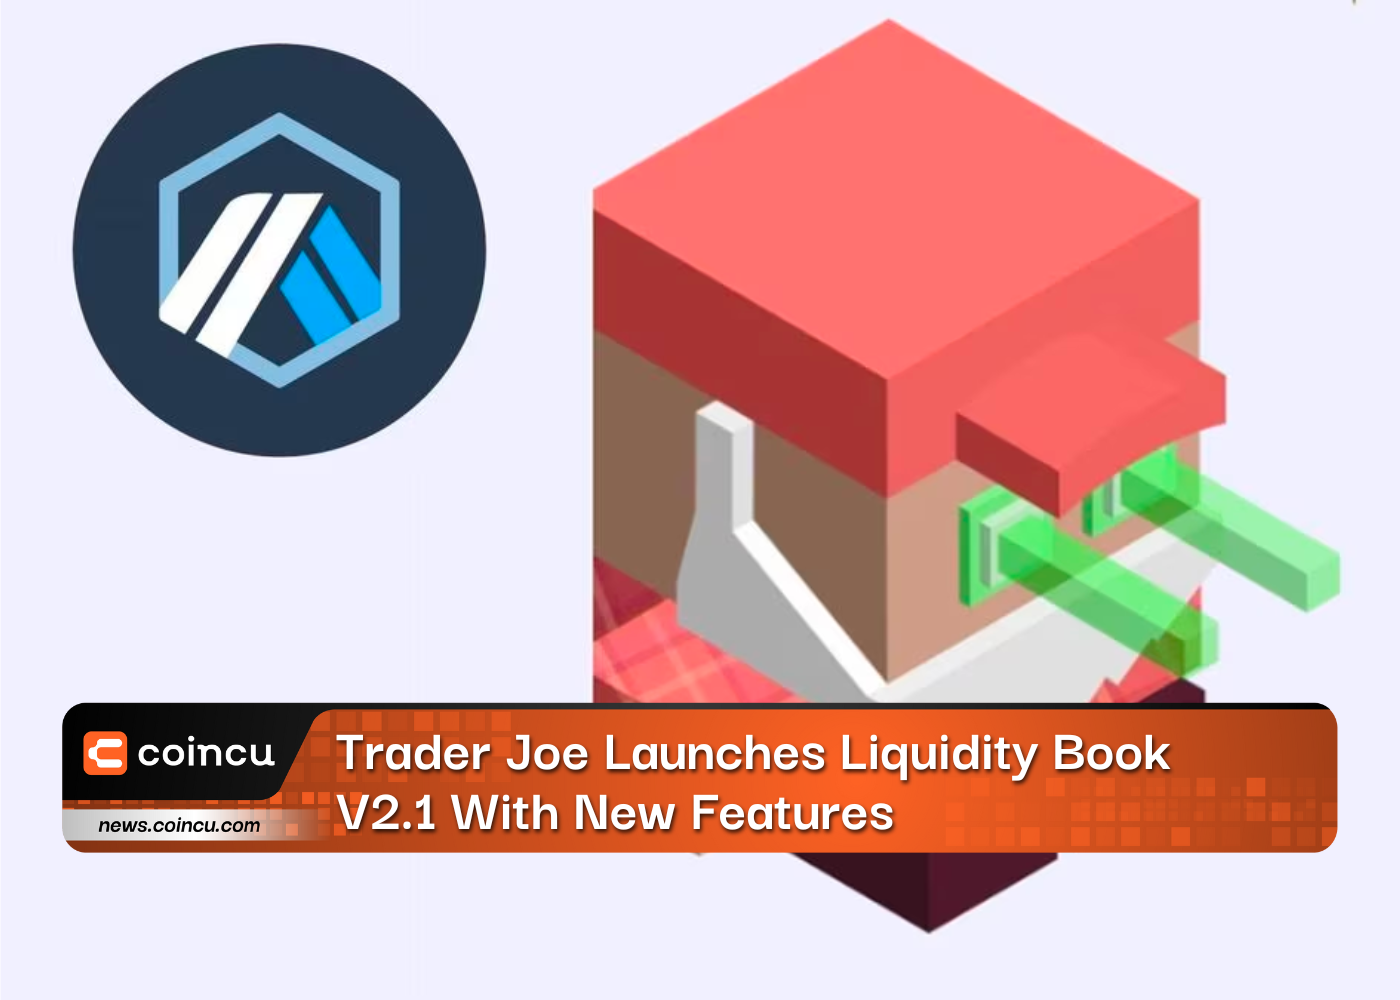 Trader Joe が新機能を備えた Liquidity Book V2.1 を発売